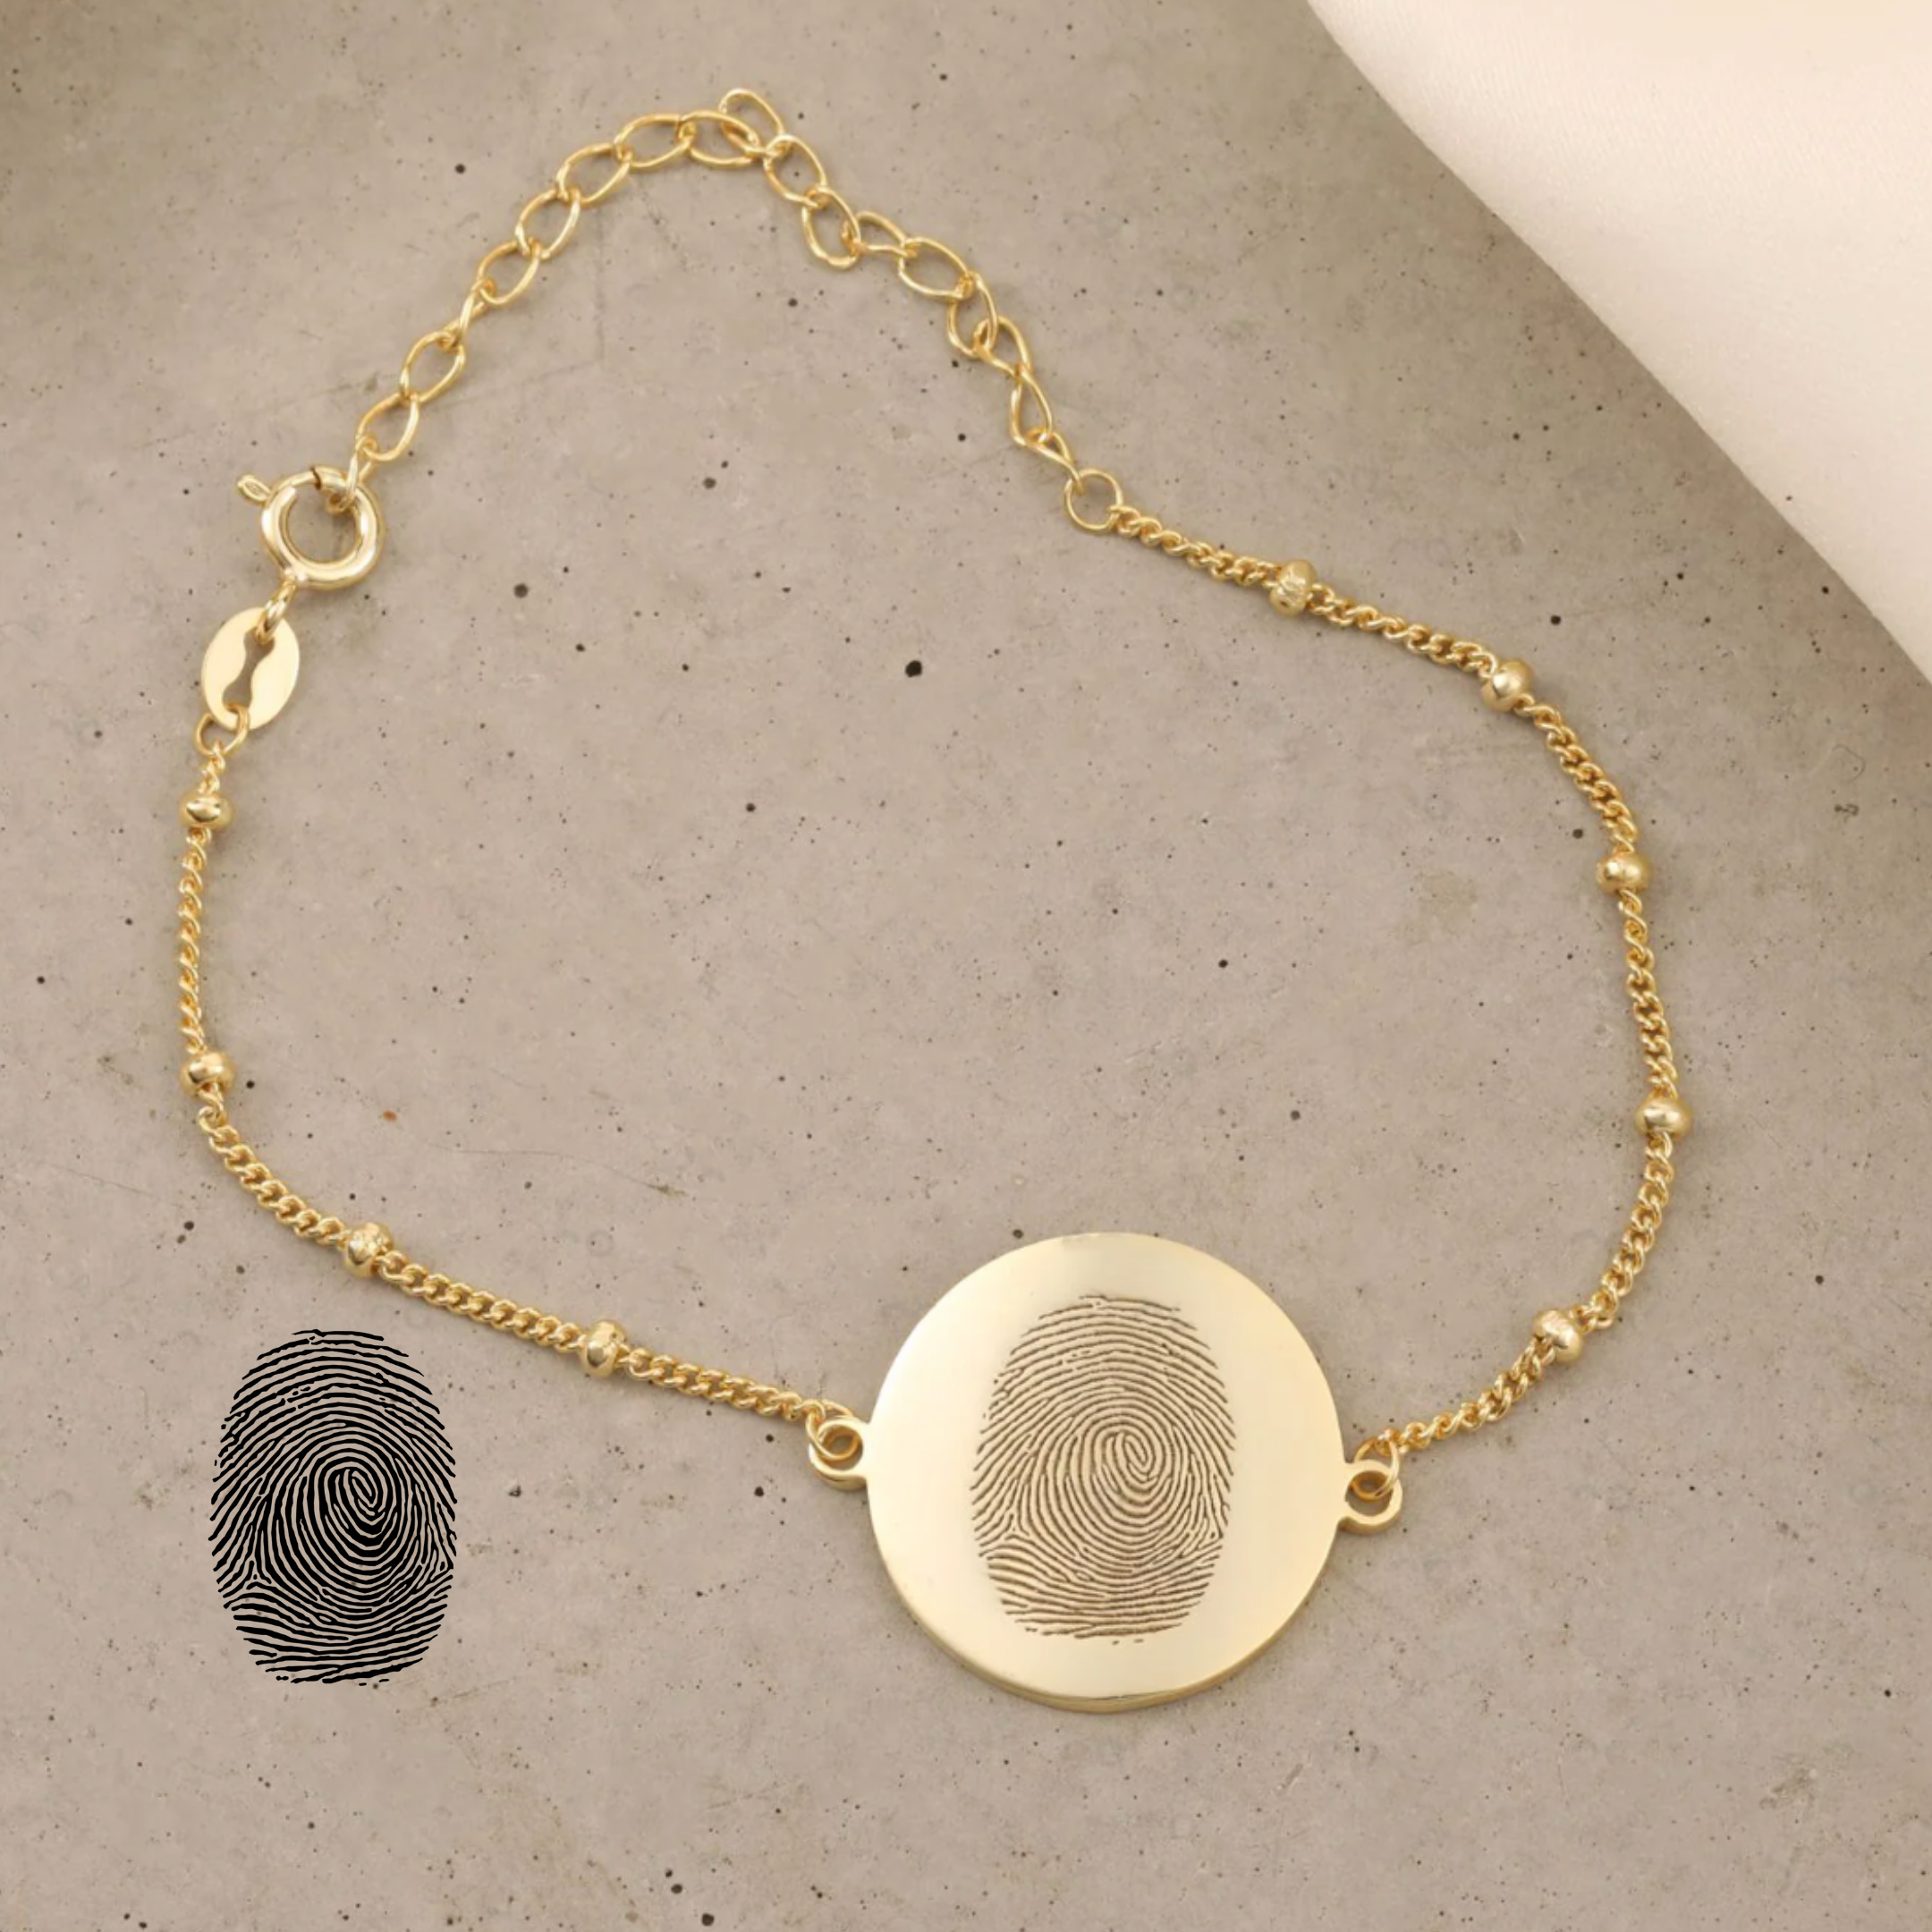 Company Necklace Jewelry Anthology | Amor\